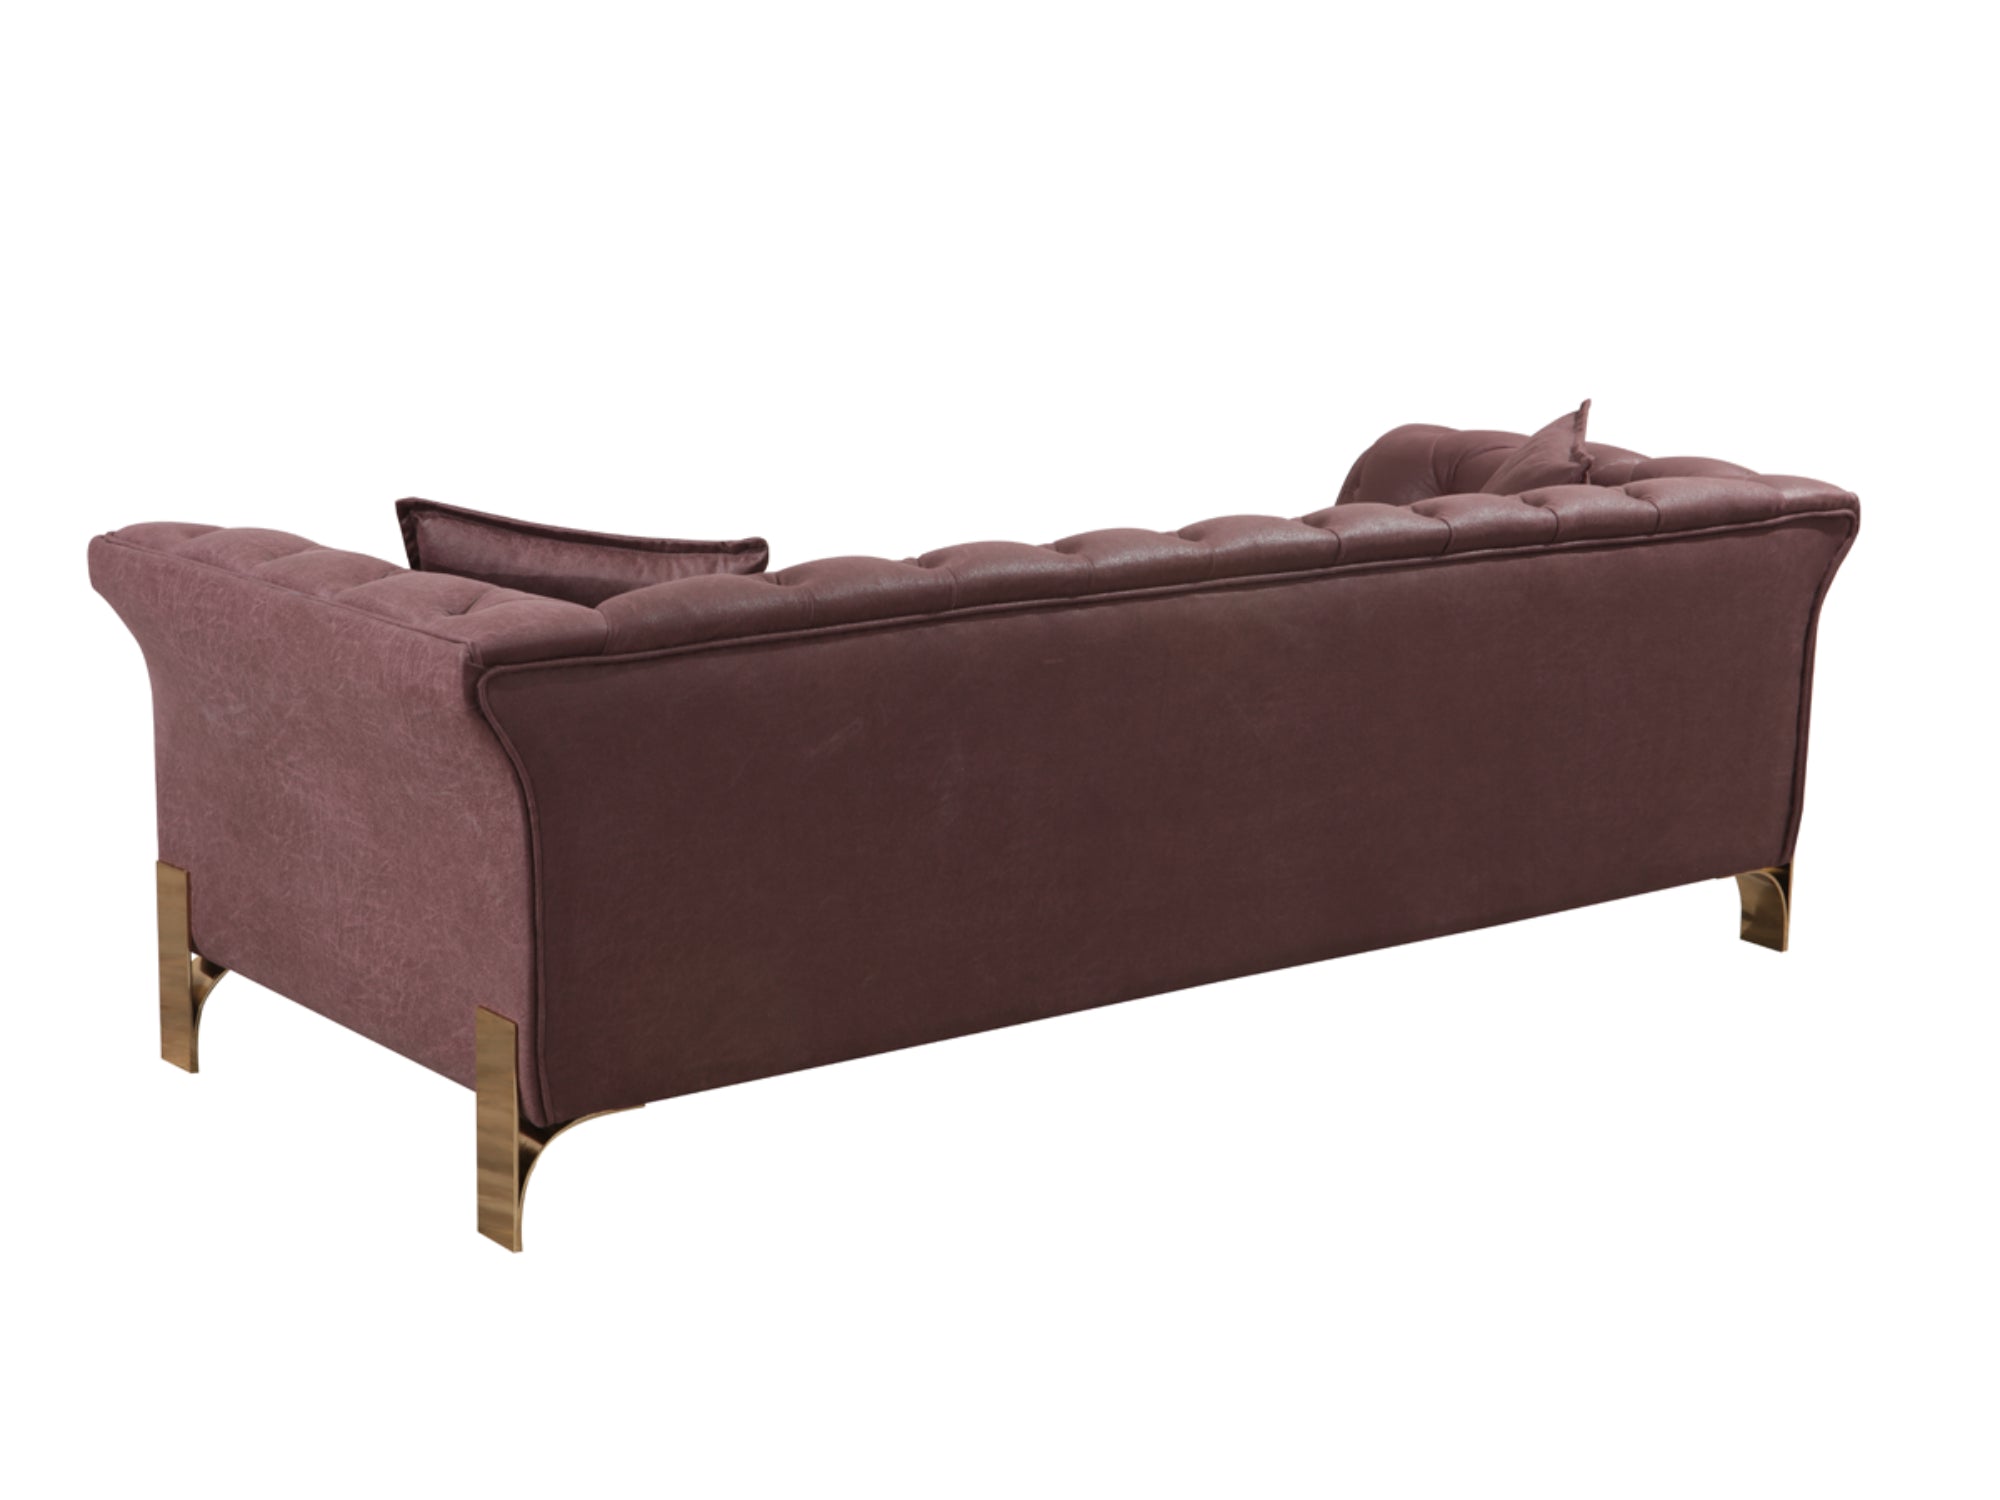 Chess Stationary Livingroom Sofa Purple With Gold Legs